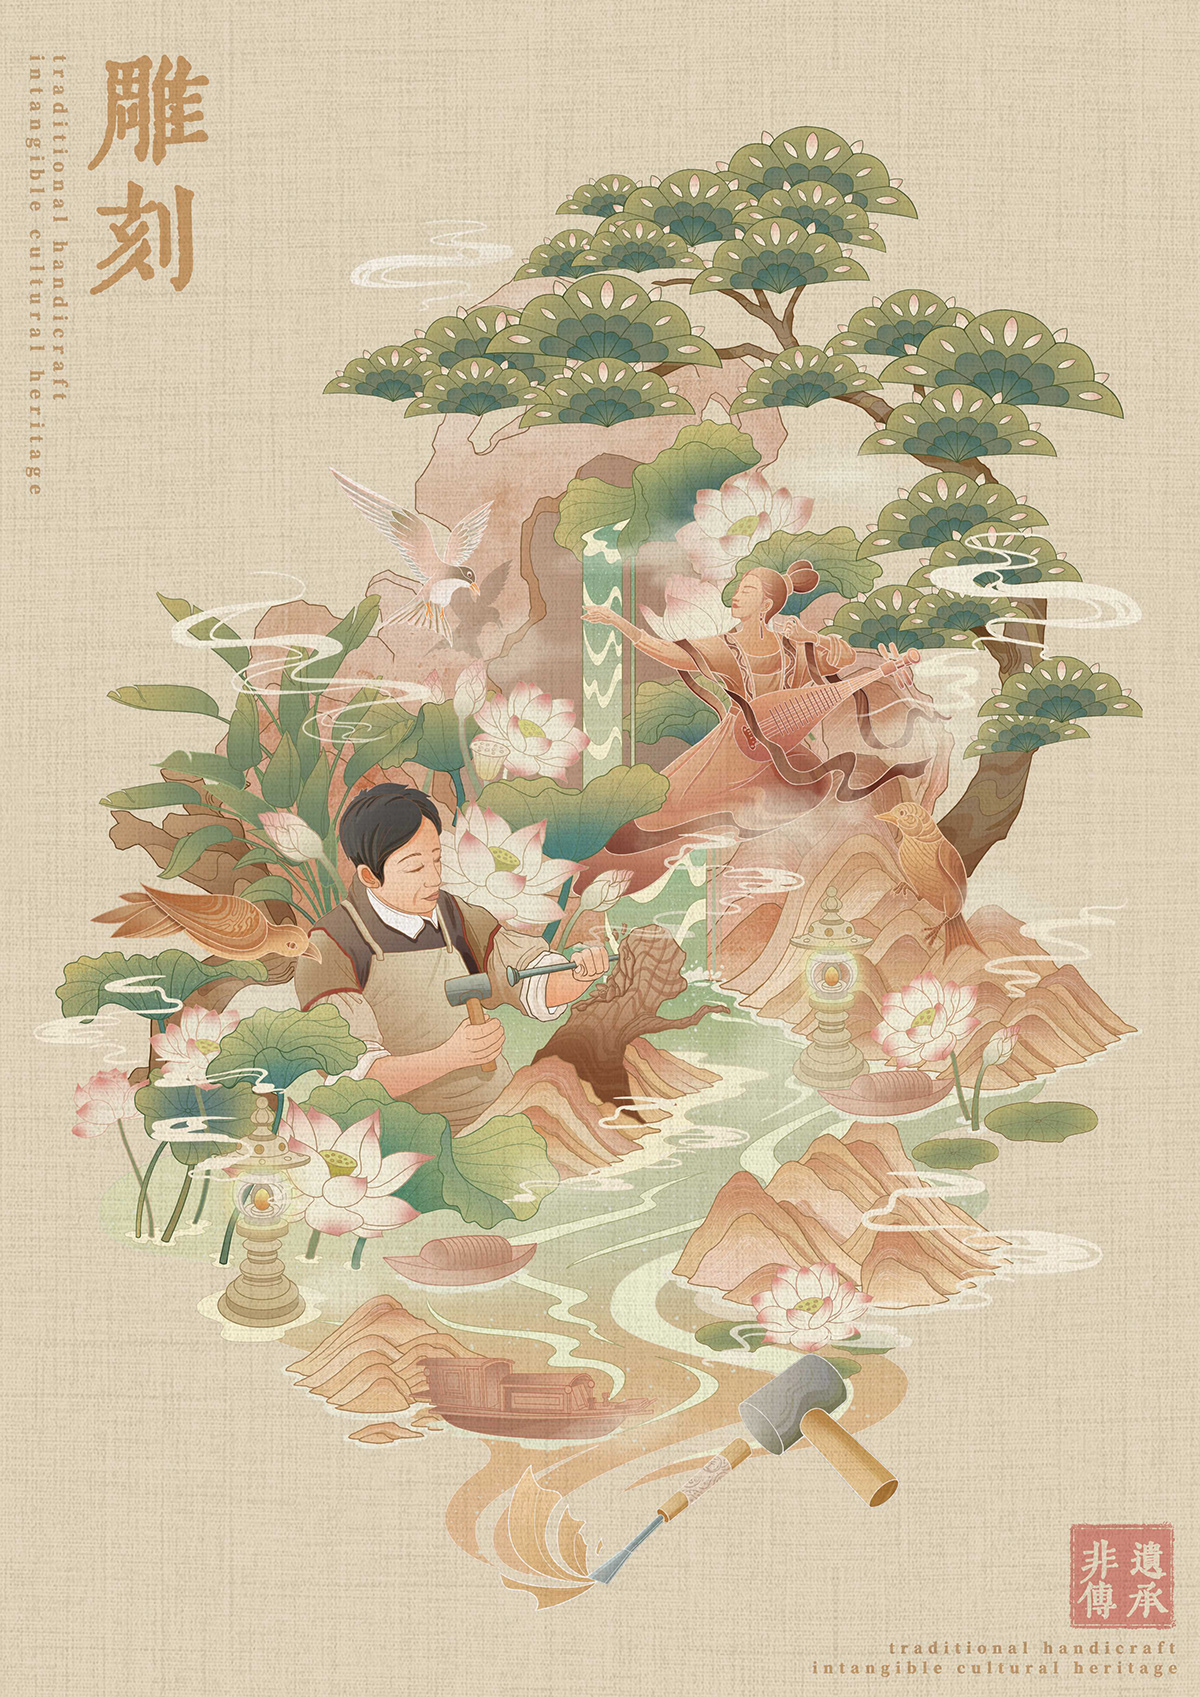 china culture intangible heritage artwork design Digital Art  ILLUSTRATION  traditional